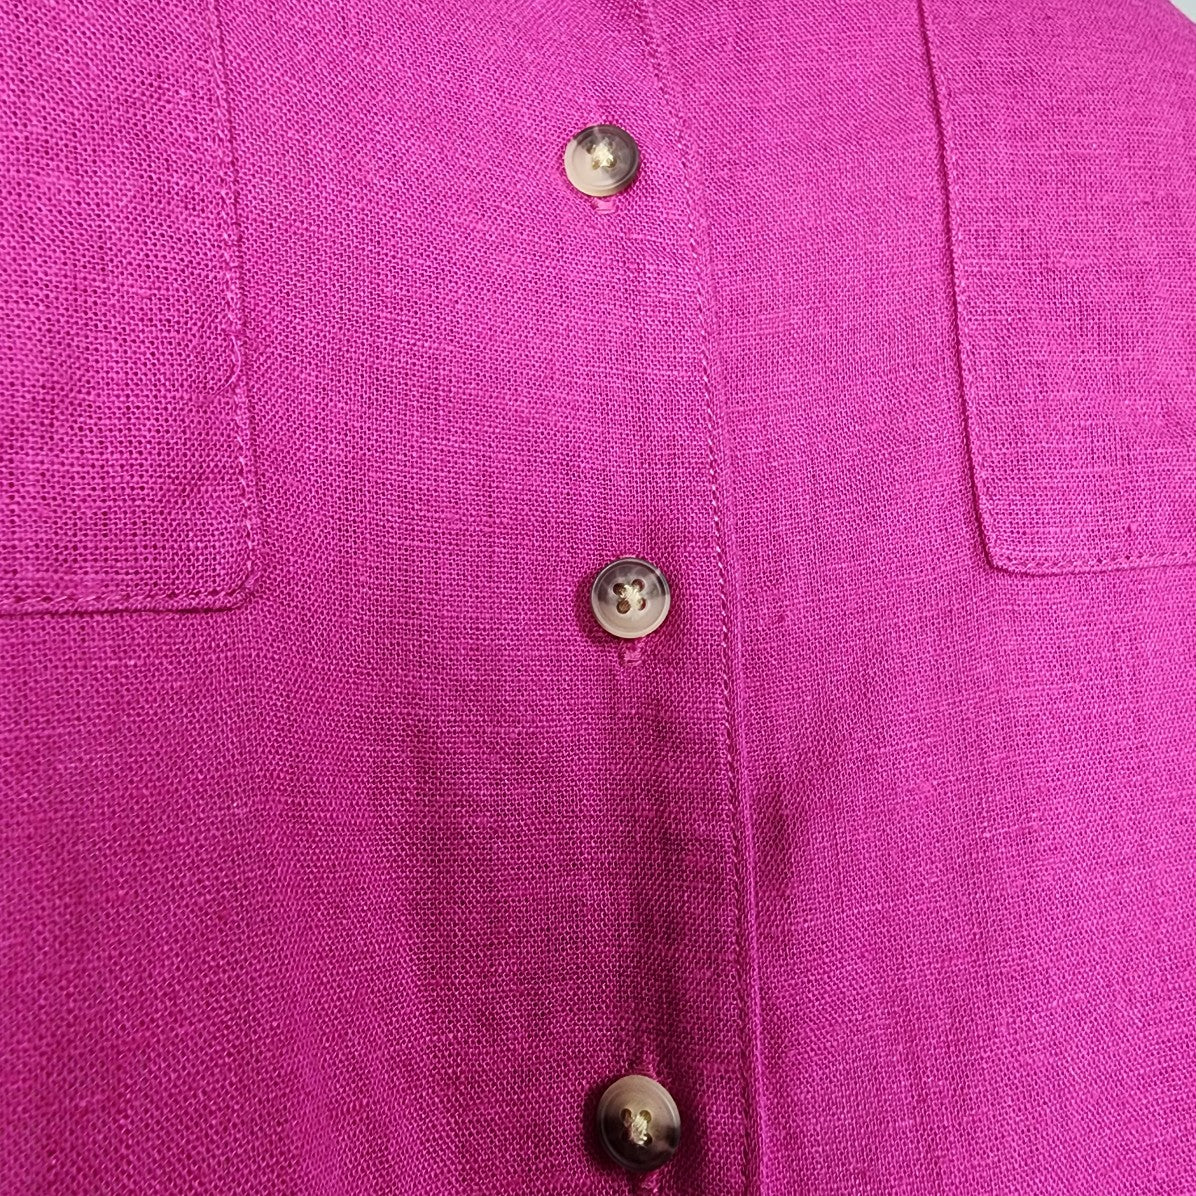 Reitmans Pink Linen Blend Button Up Collared Top Size 2X